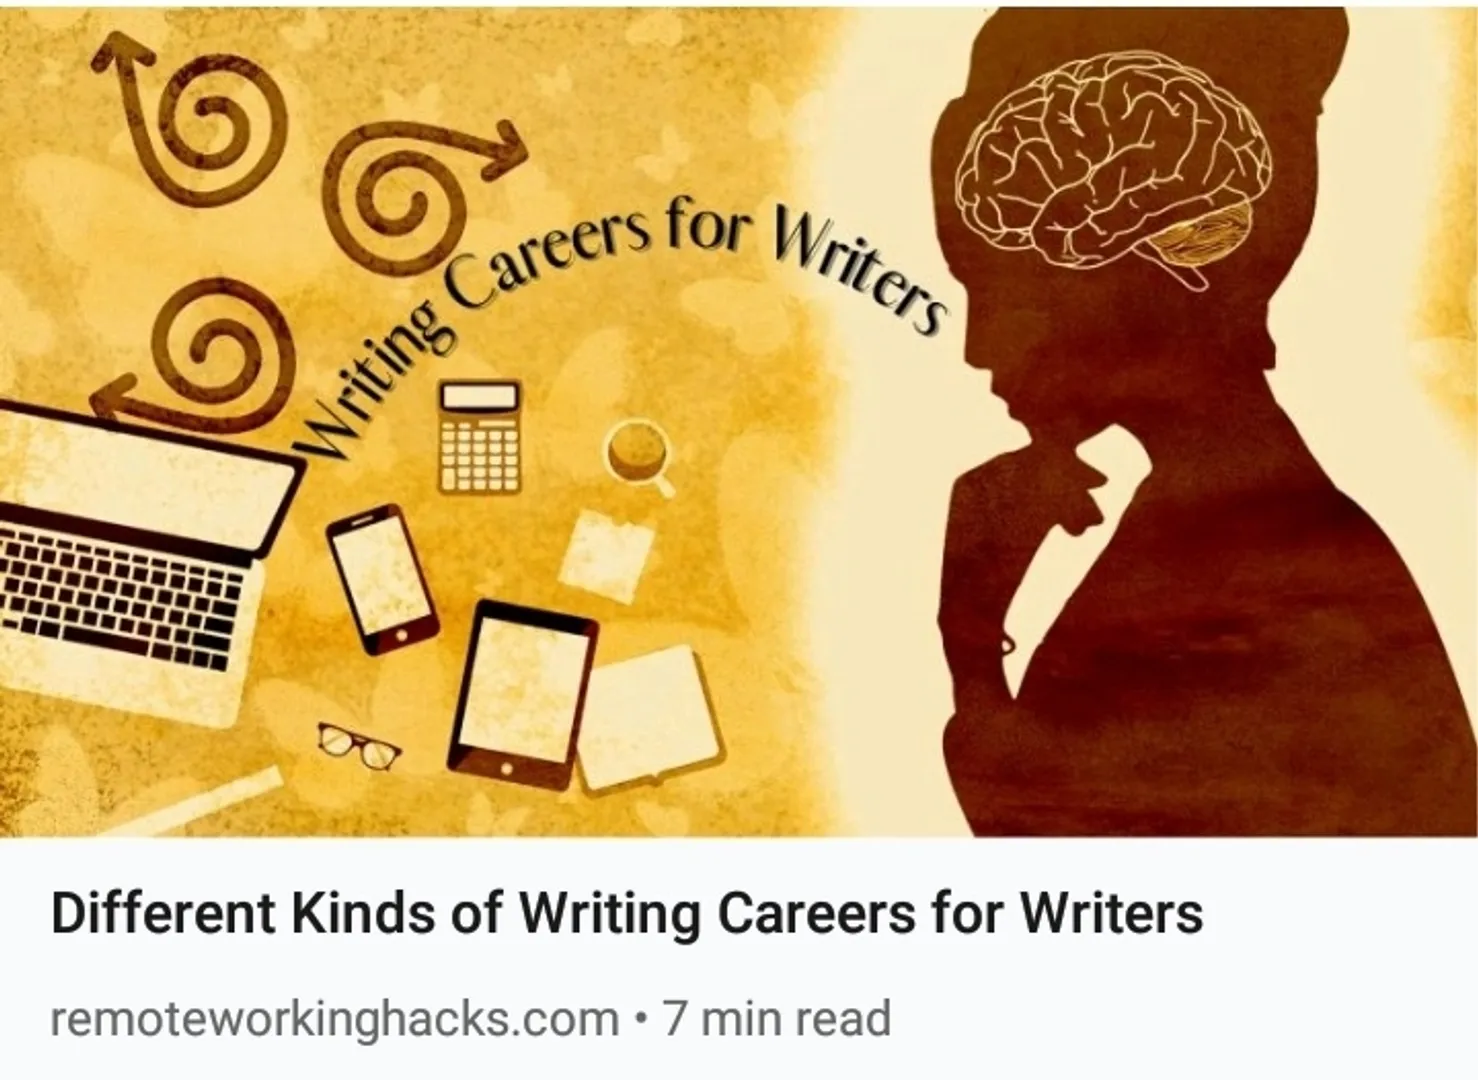 https://remoteworkinghacks.com/writing-careers-for-writers/

#writer
#freelancing
#remoteworking
#contentwriting
#contentmarketing 